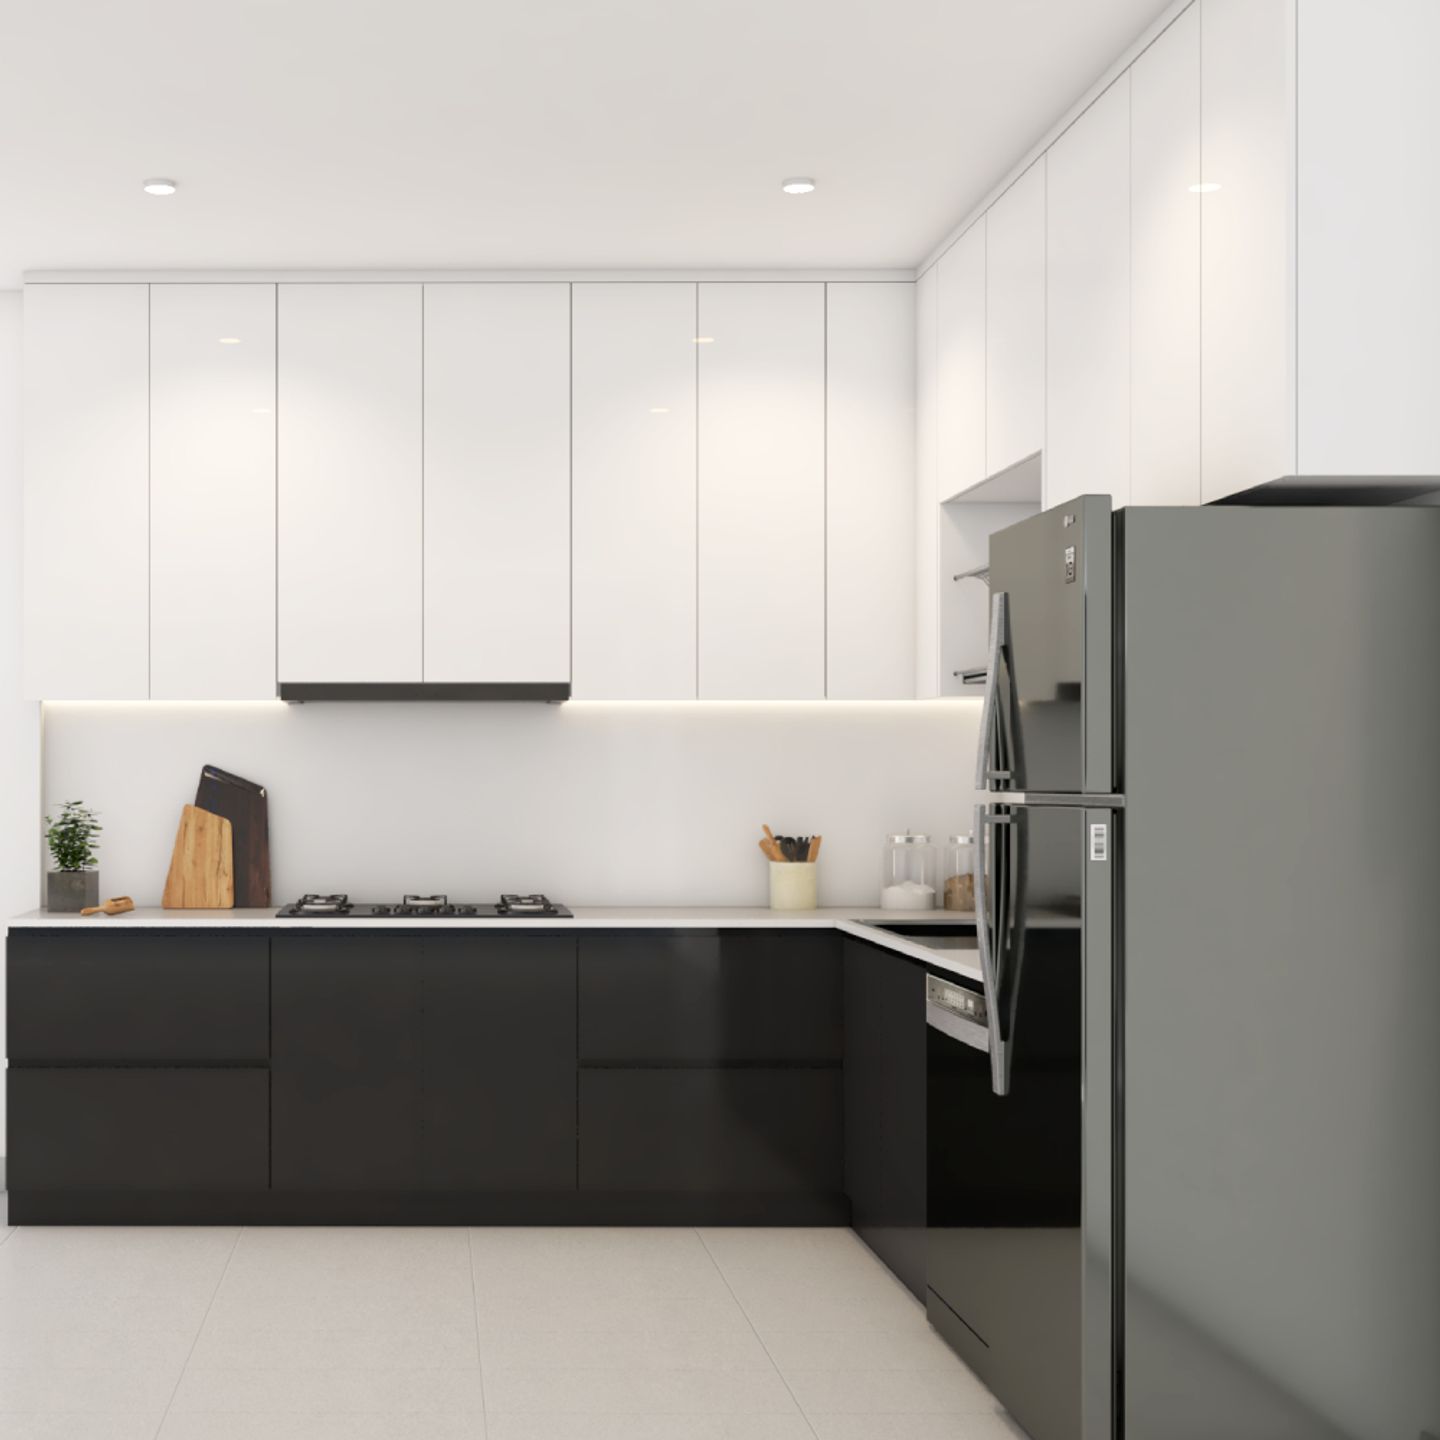 Black And White L-Shaped Kitchen Design With Minimalistic Aesthetics - Livspace